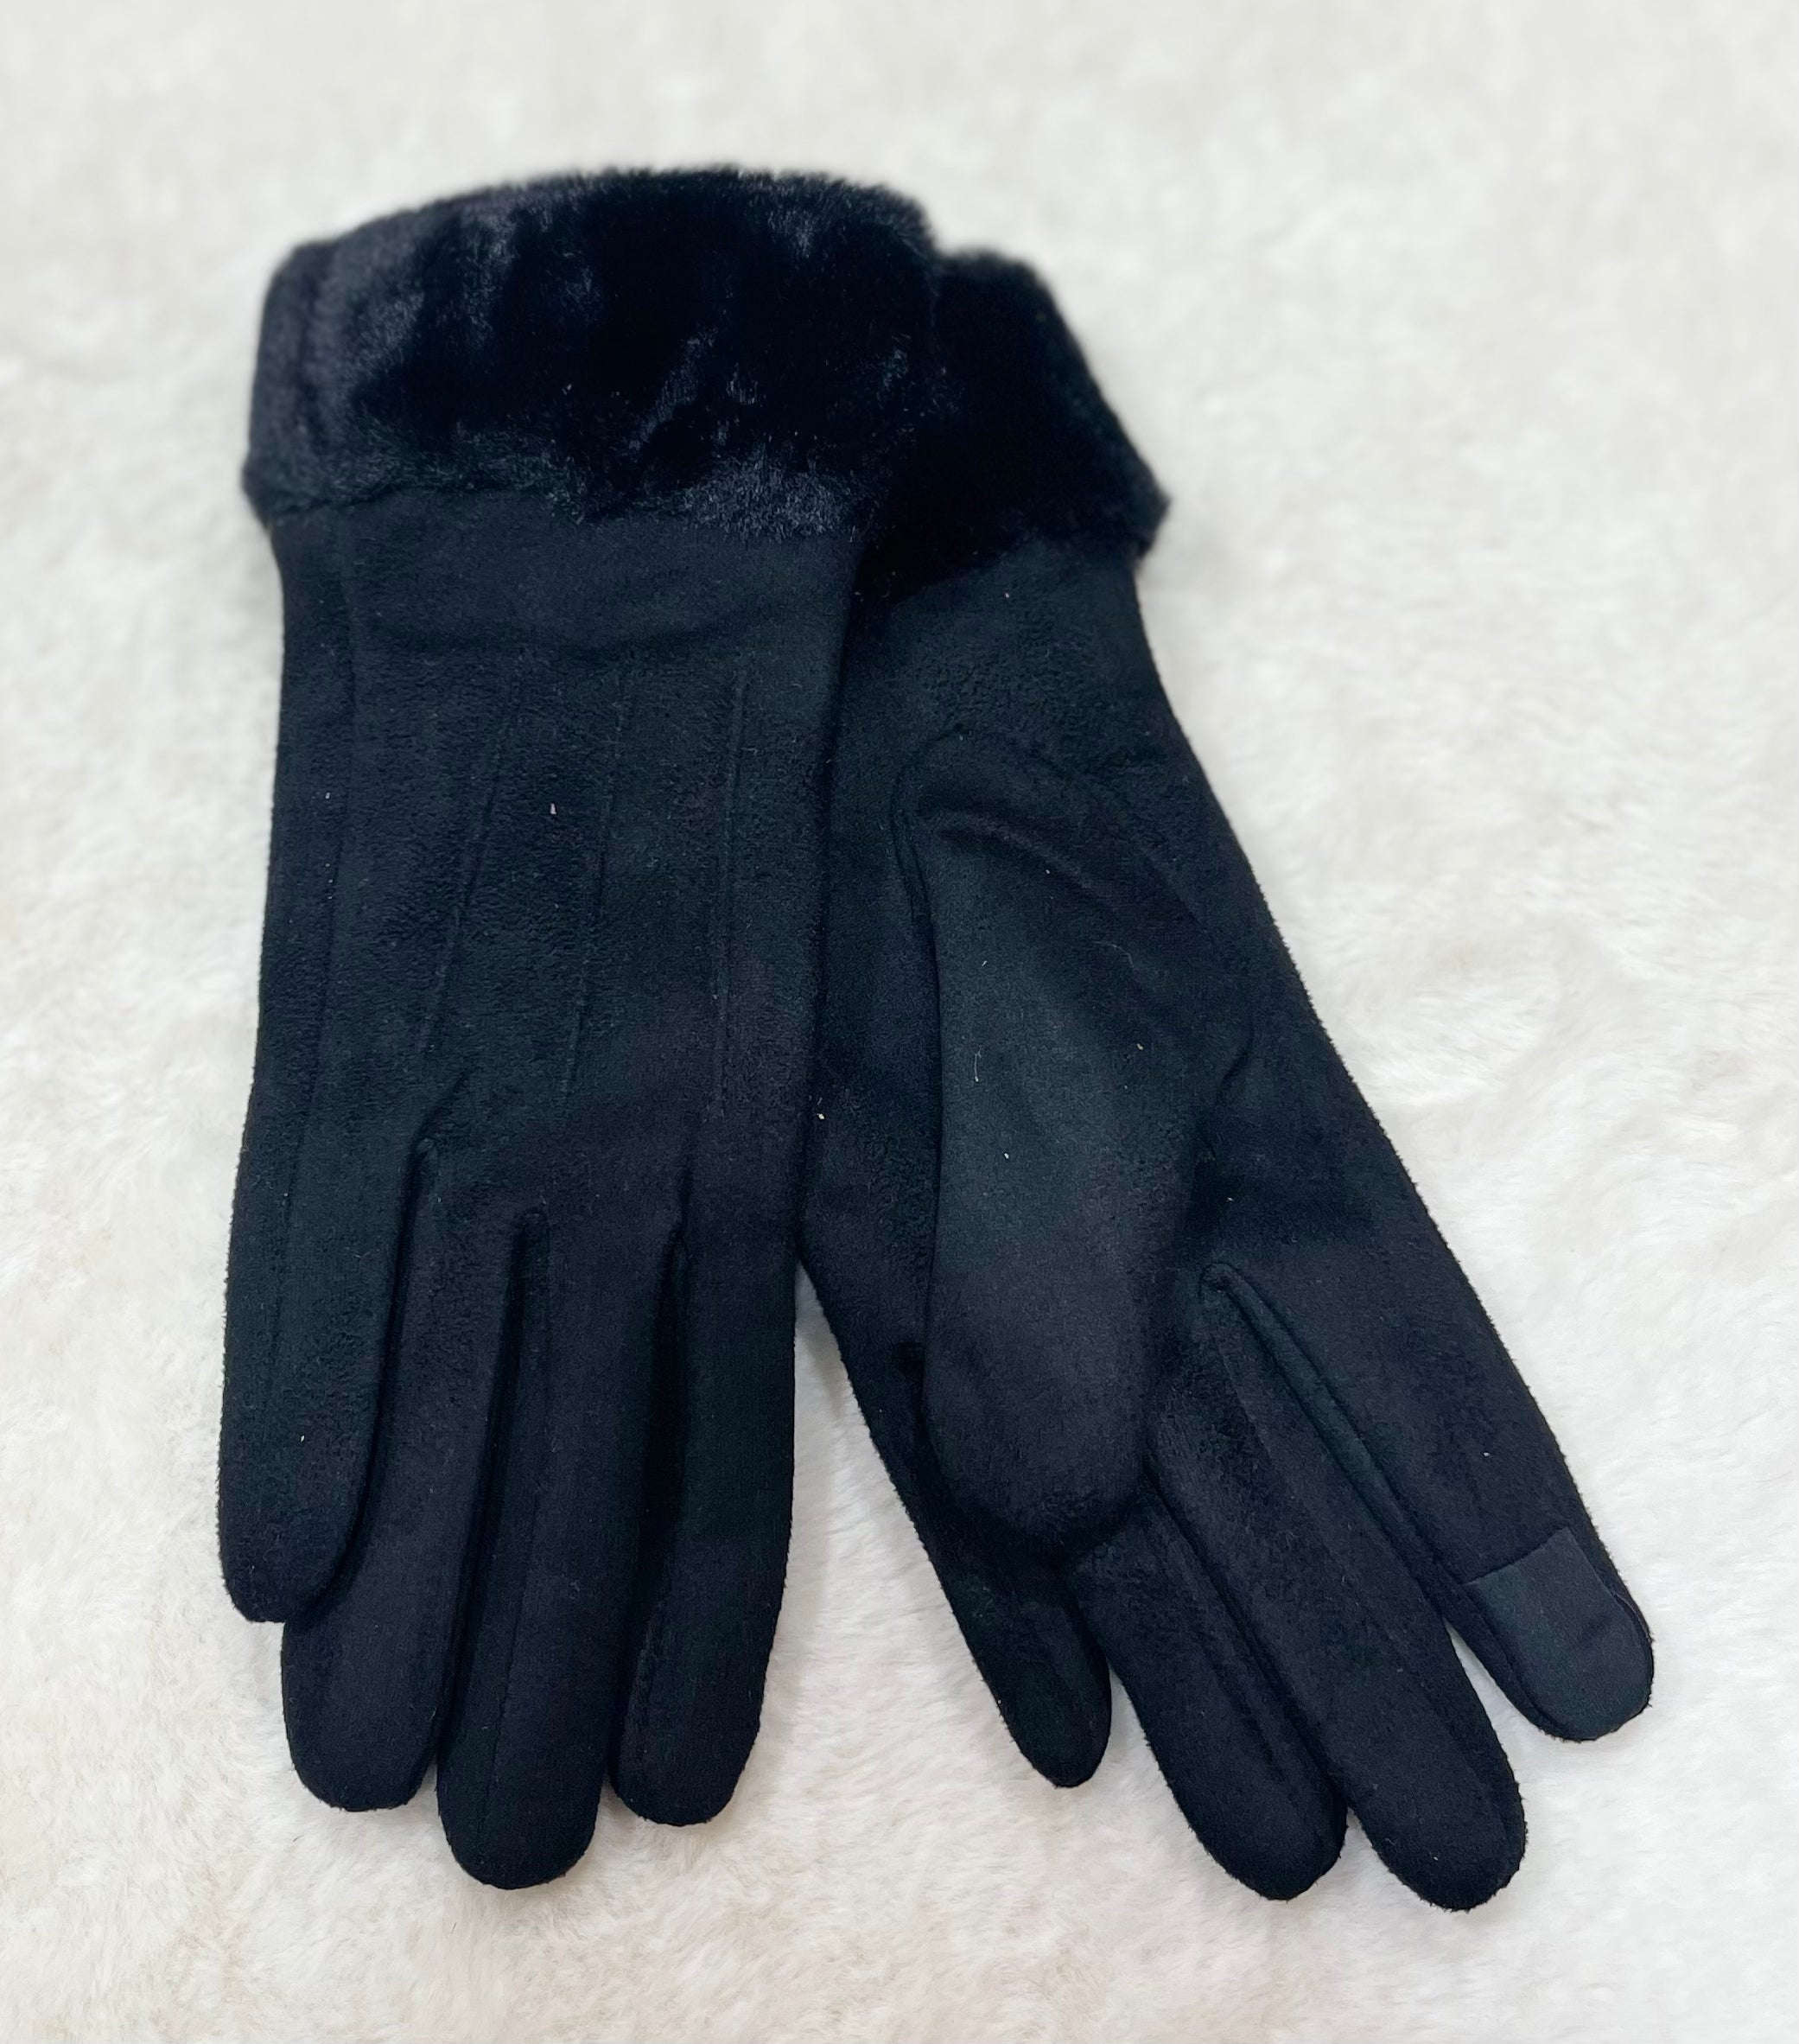 Women’s black suede gloves with faux fur trim